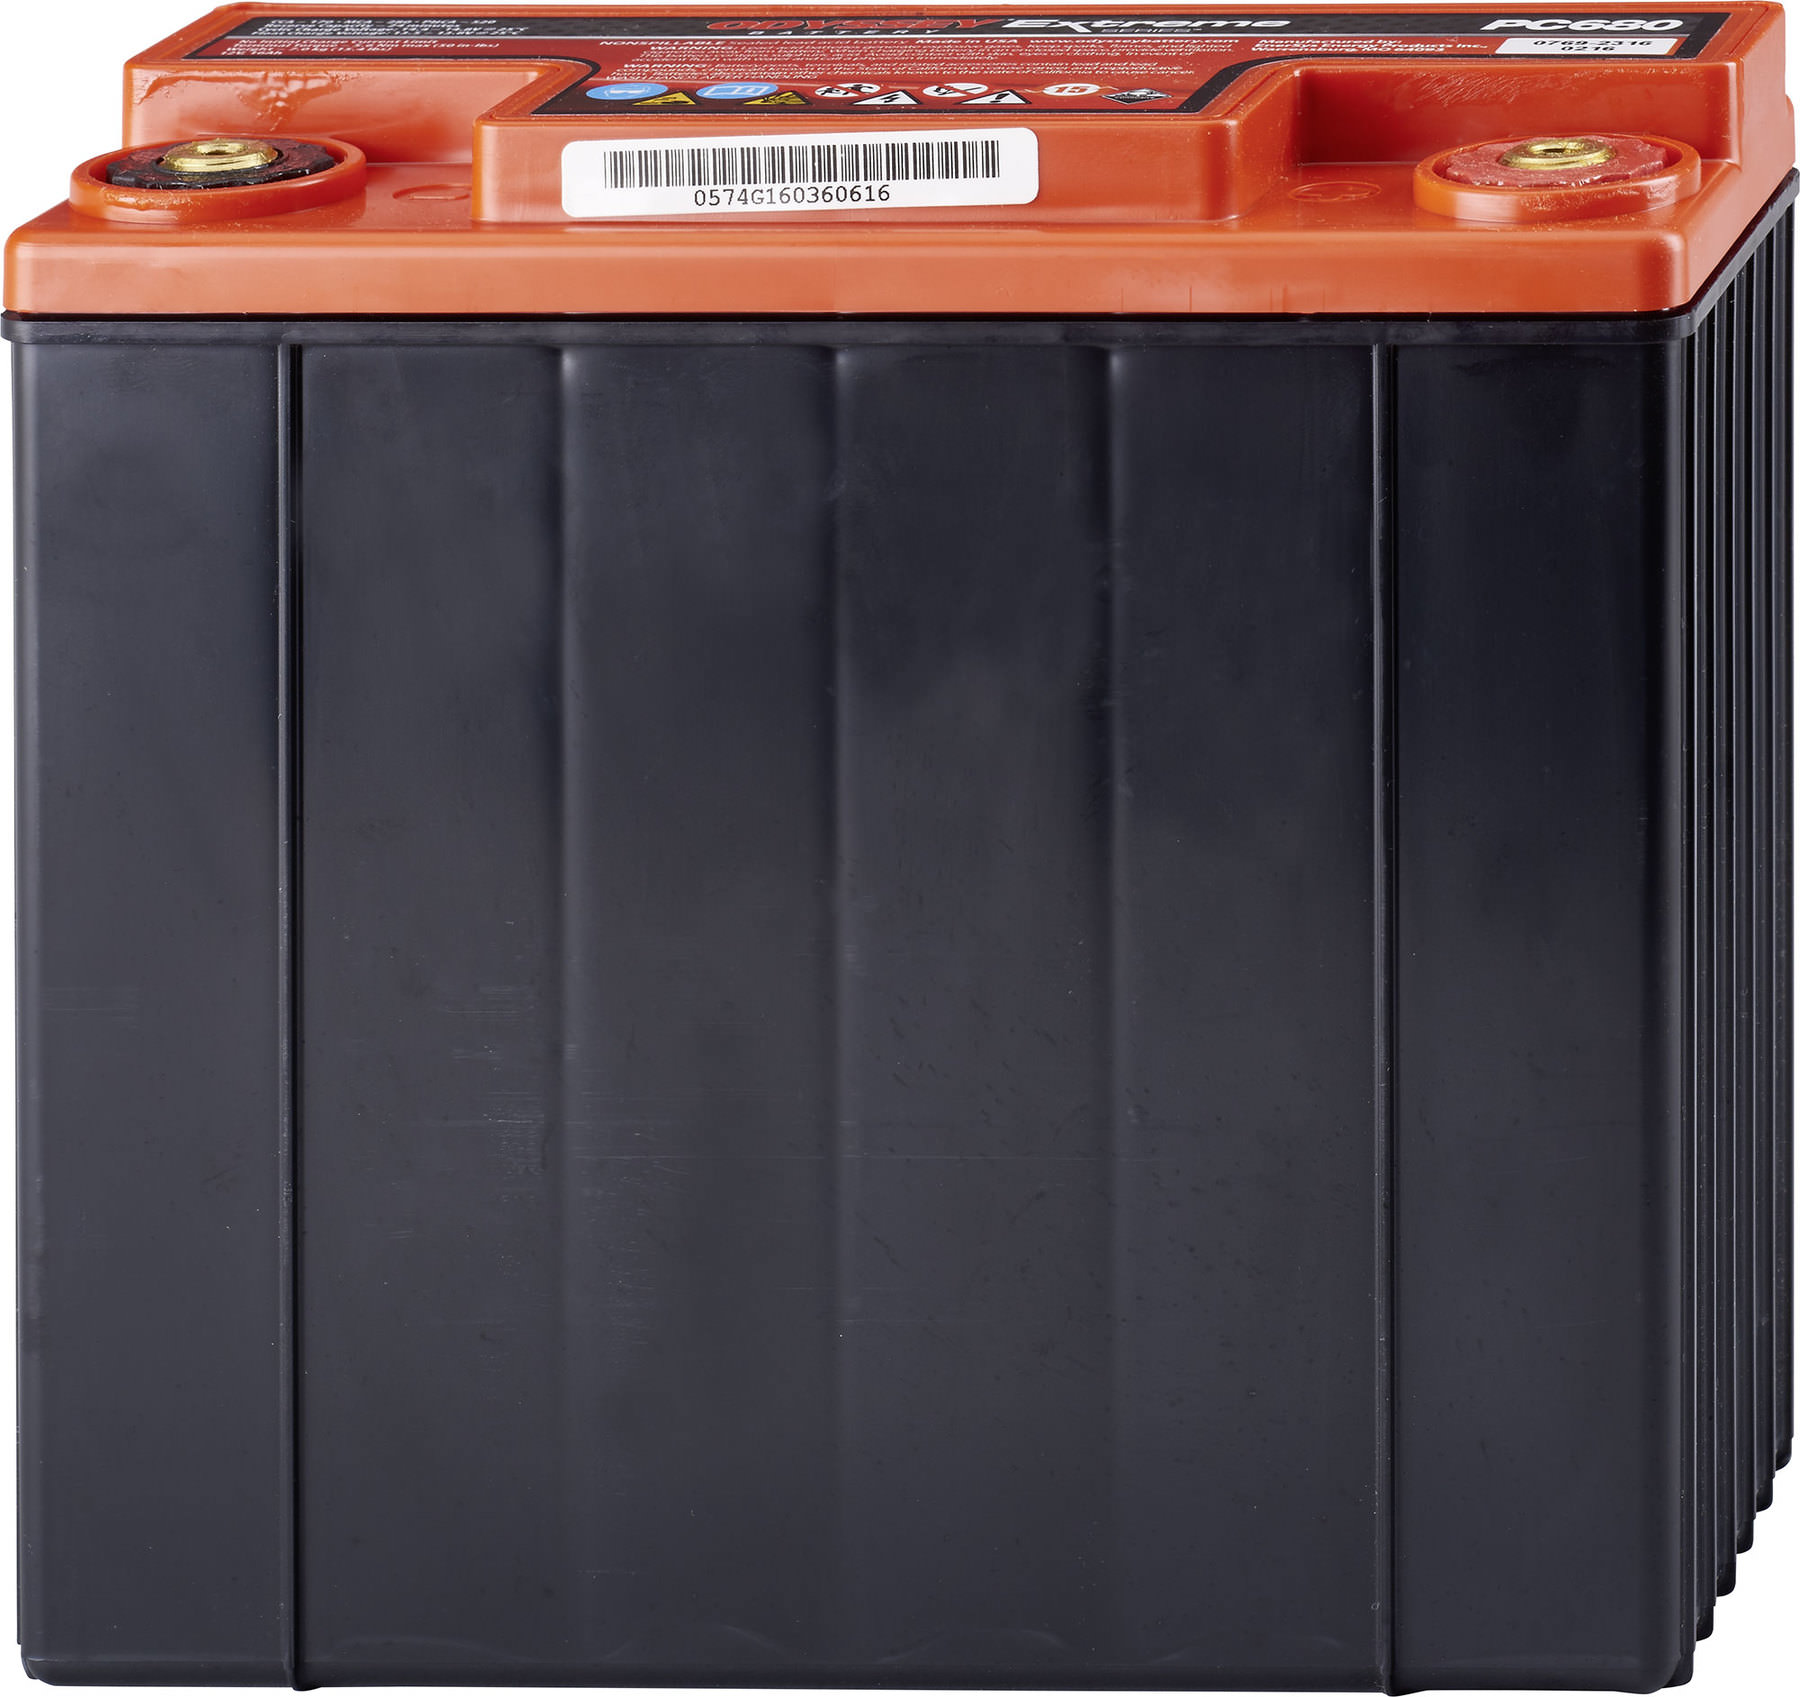 Bespreken droogte Ontleden Odyssey Battery ODYSSEY 100% LOOD-ACCU PC680 12V/16AH SAE 170A